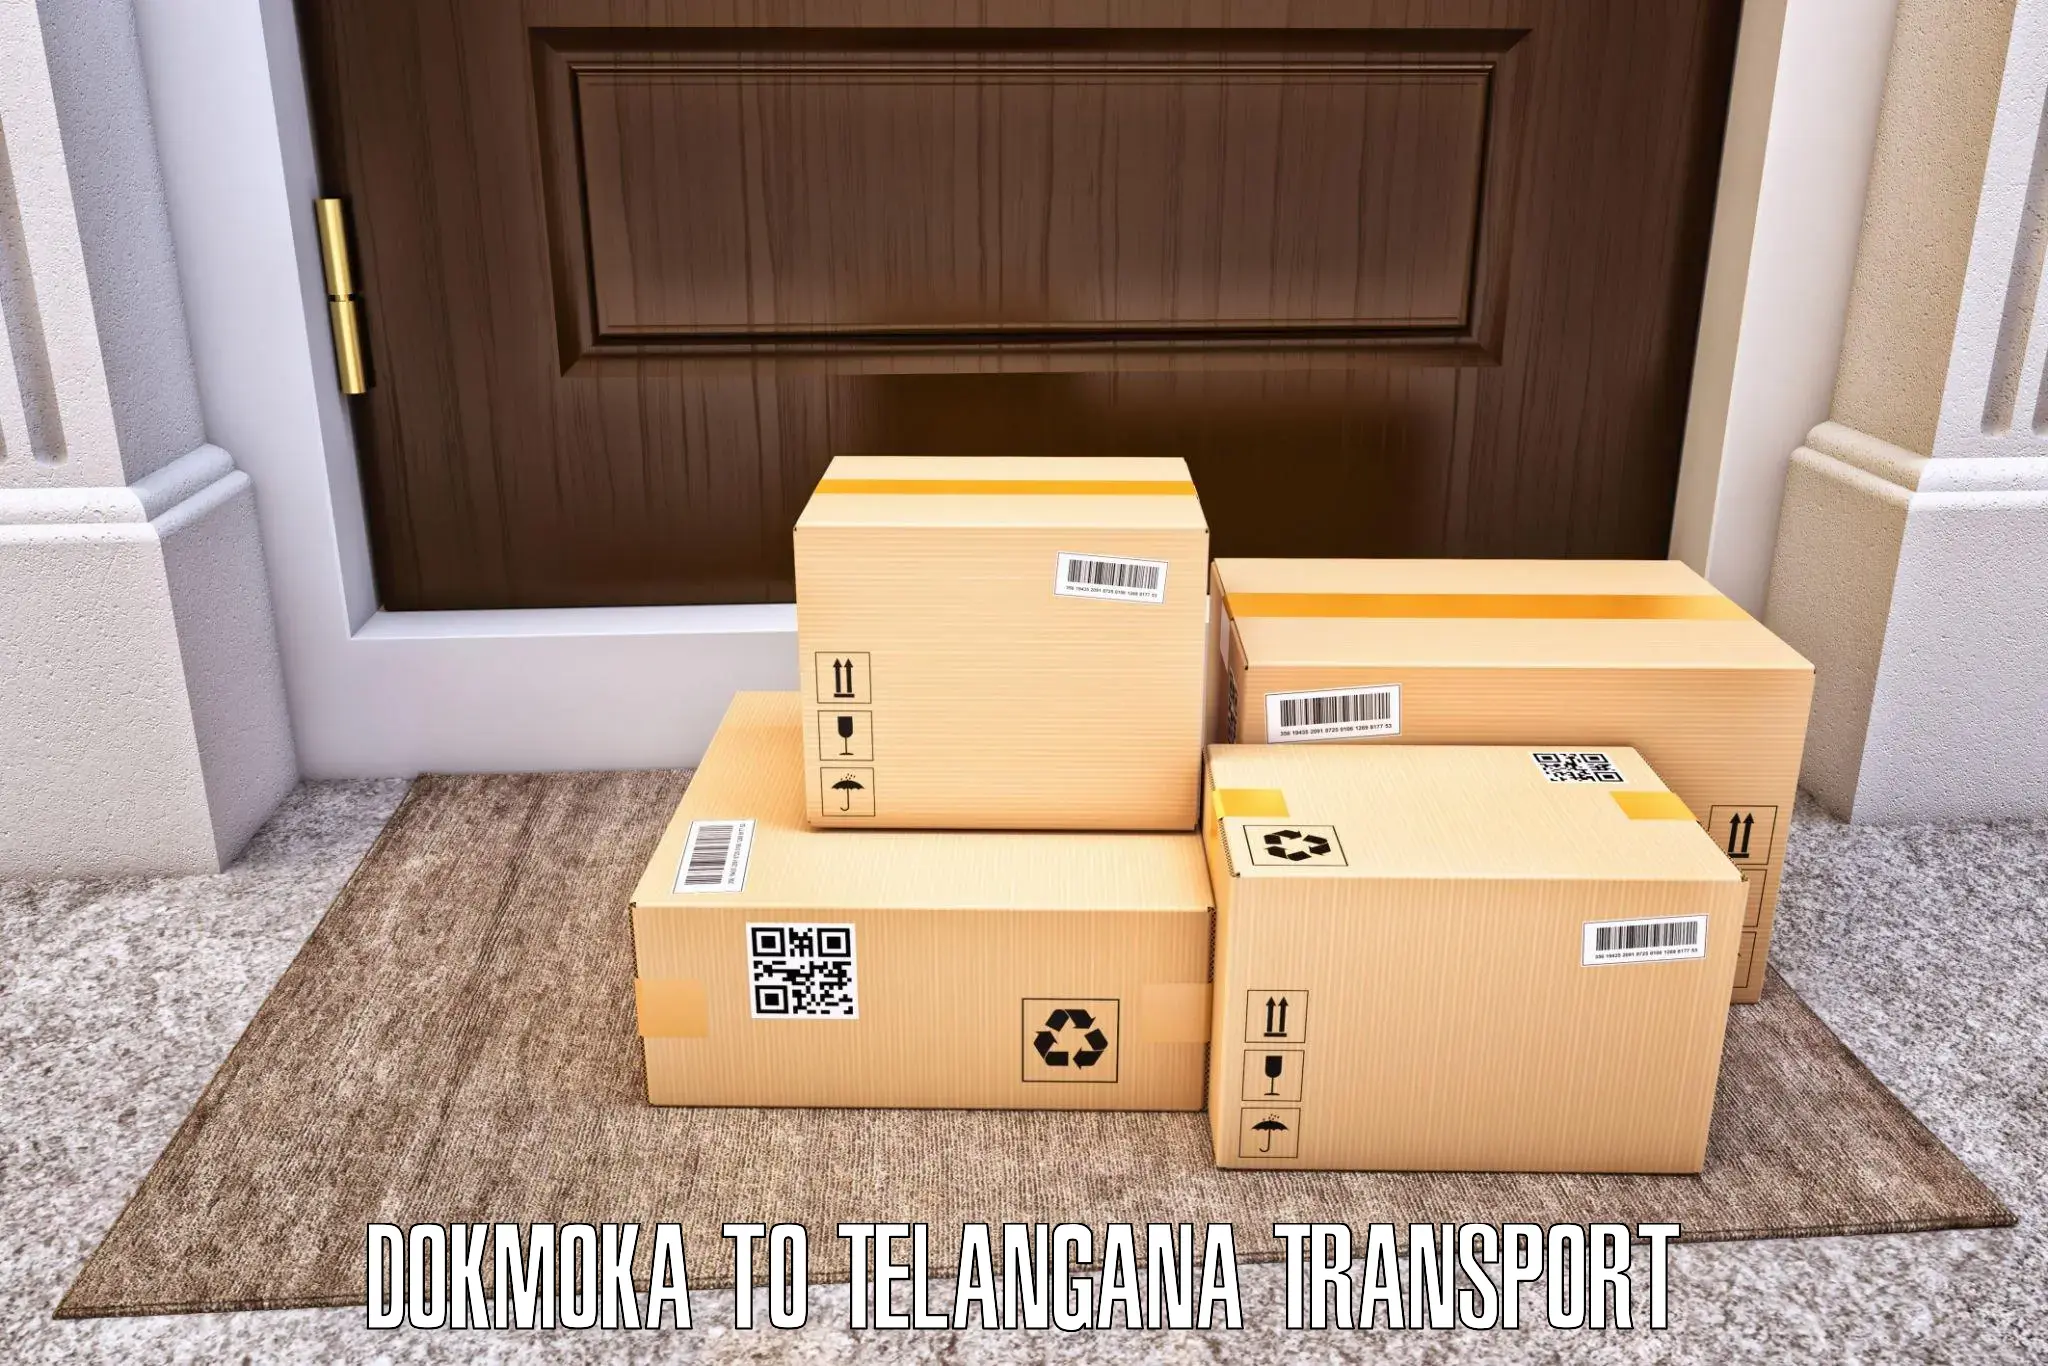 Commercial transport service in Dokmoka to Ichoda